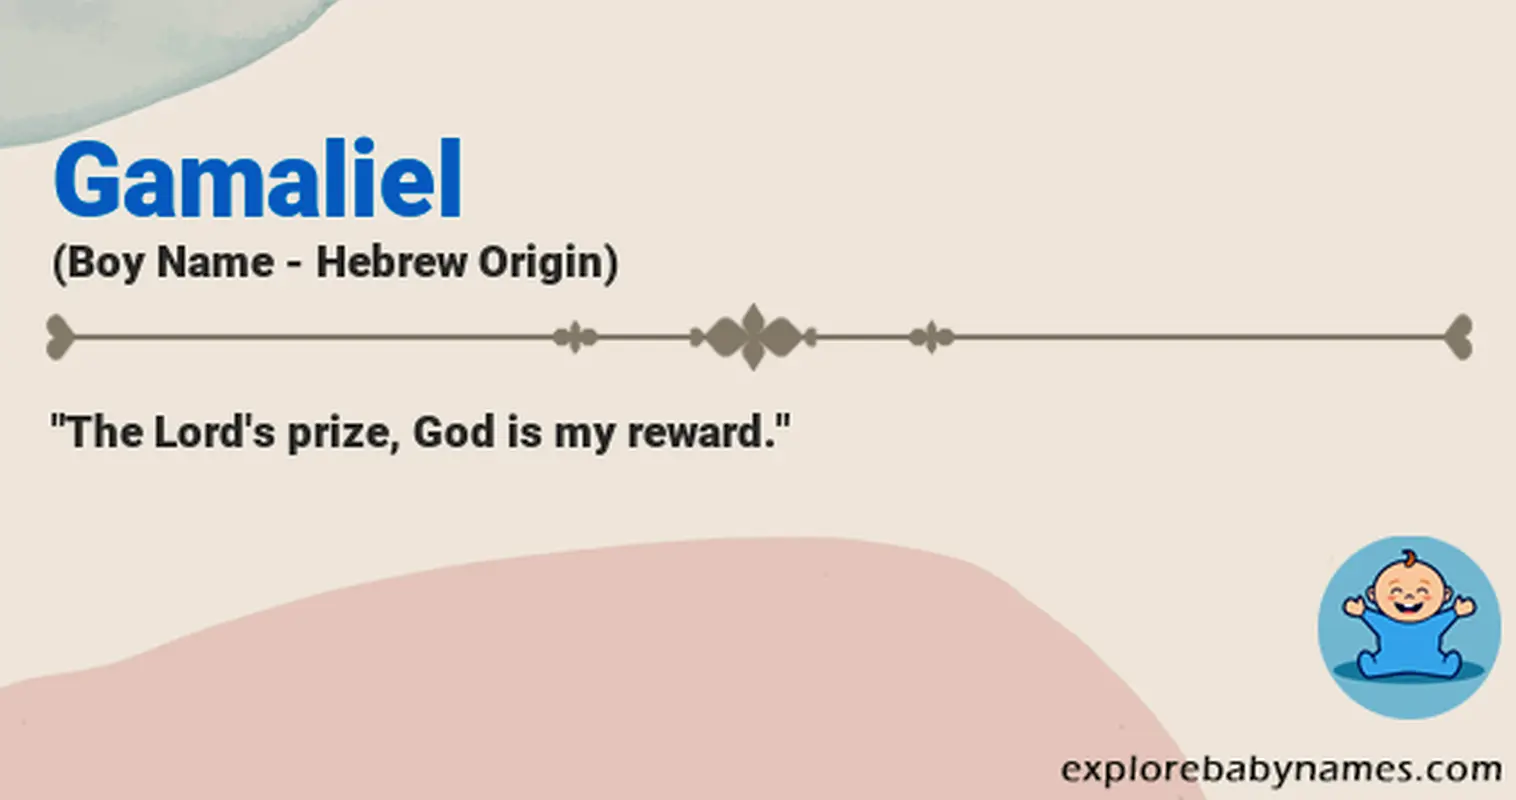 Meaning of Gamaliel